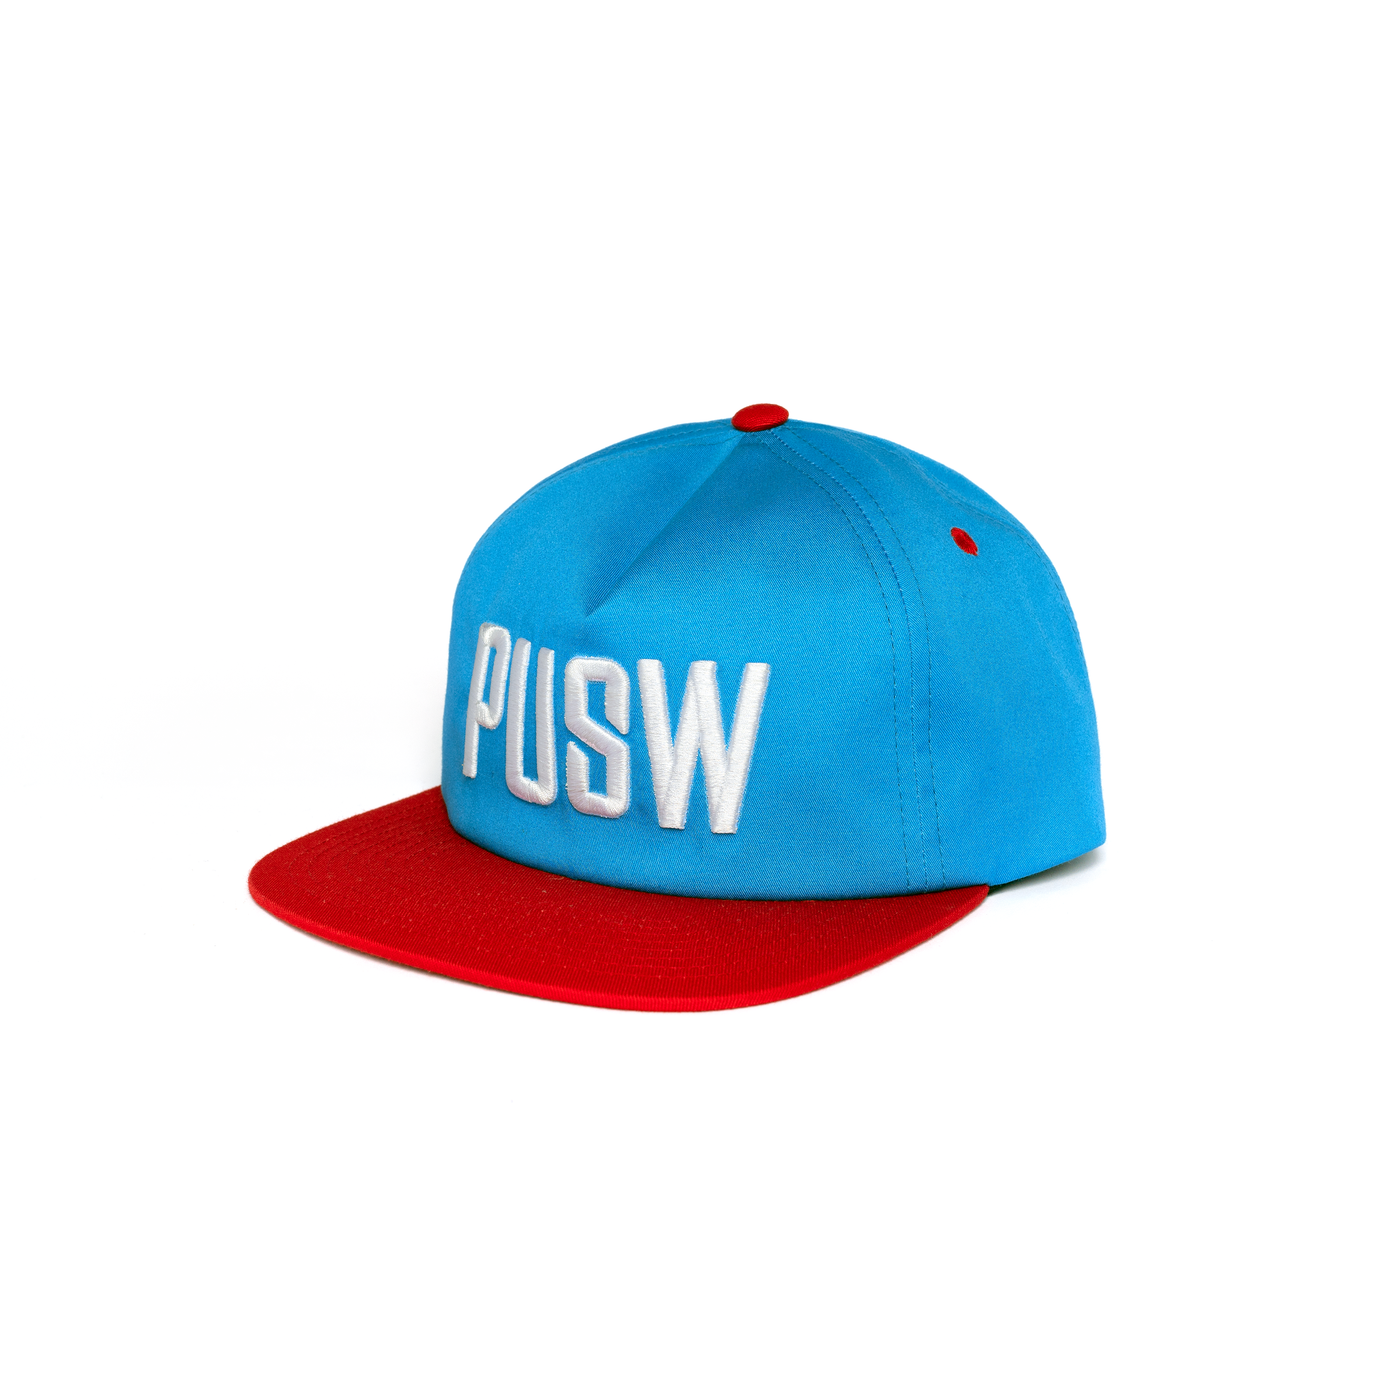 PUSW Logo Snapback